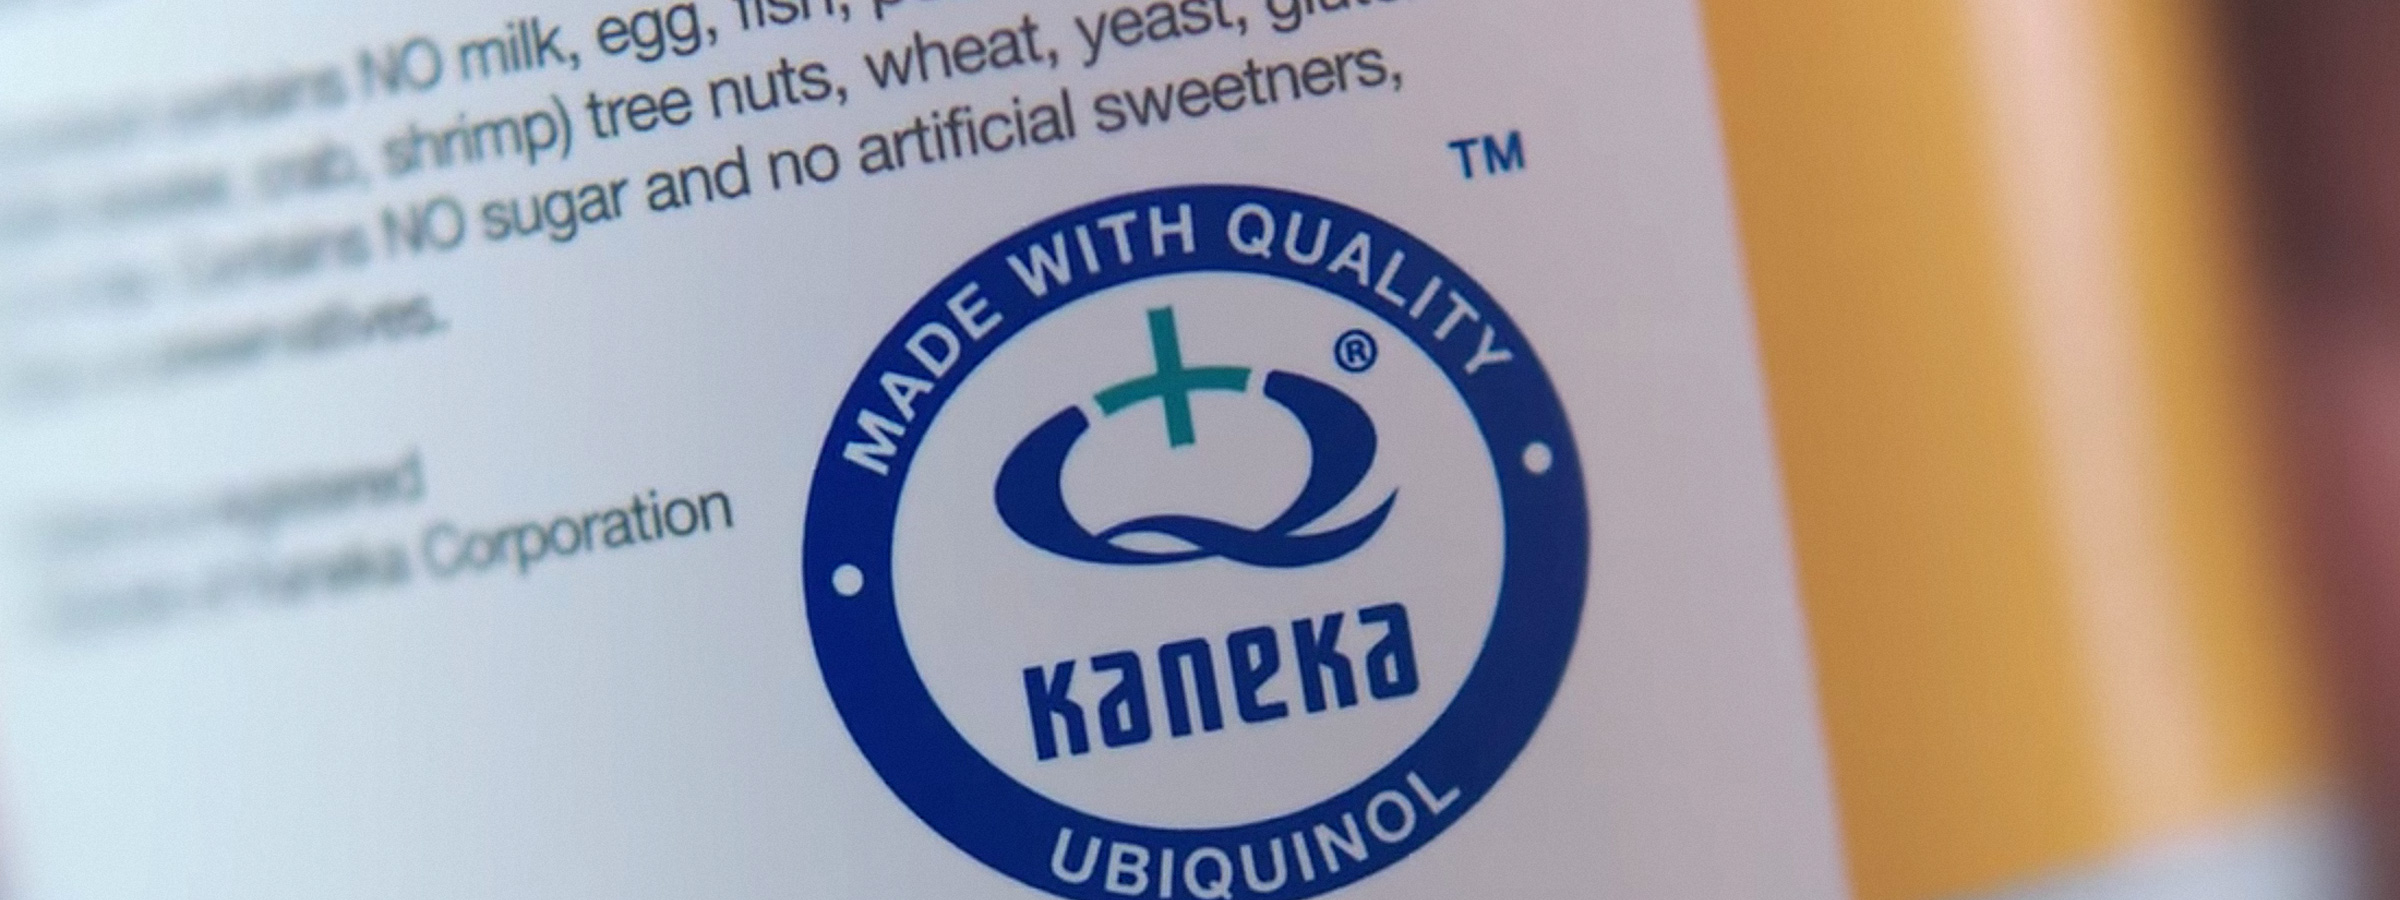 Kaneka Quality Seal on a bottle of Ubiquinol